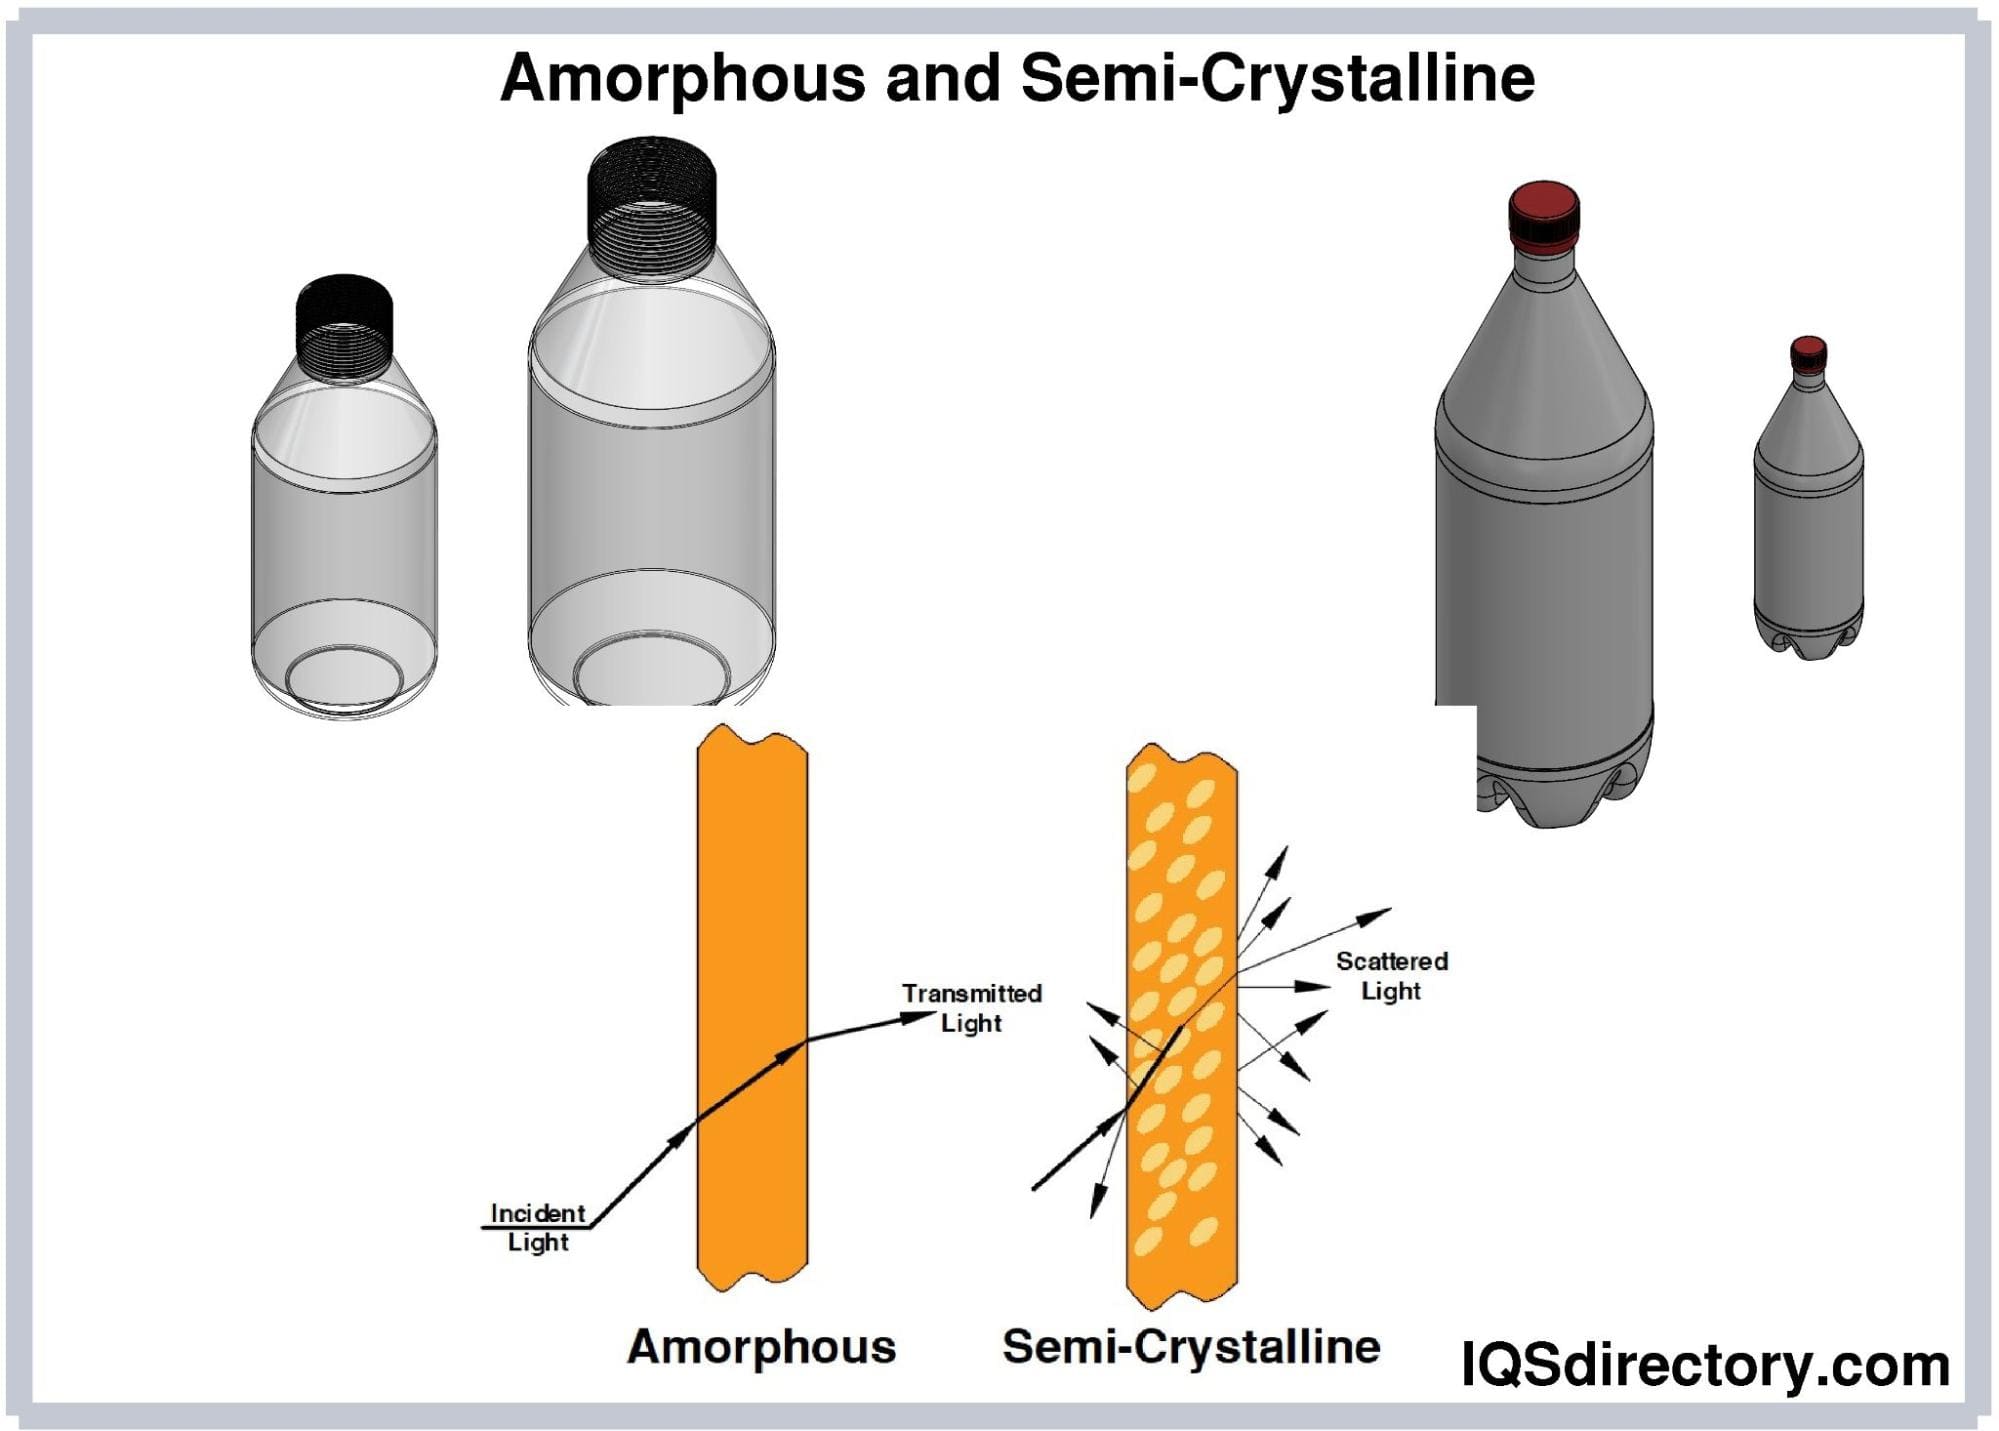 Amorphous and Semi-Crystalline